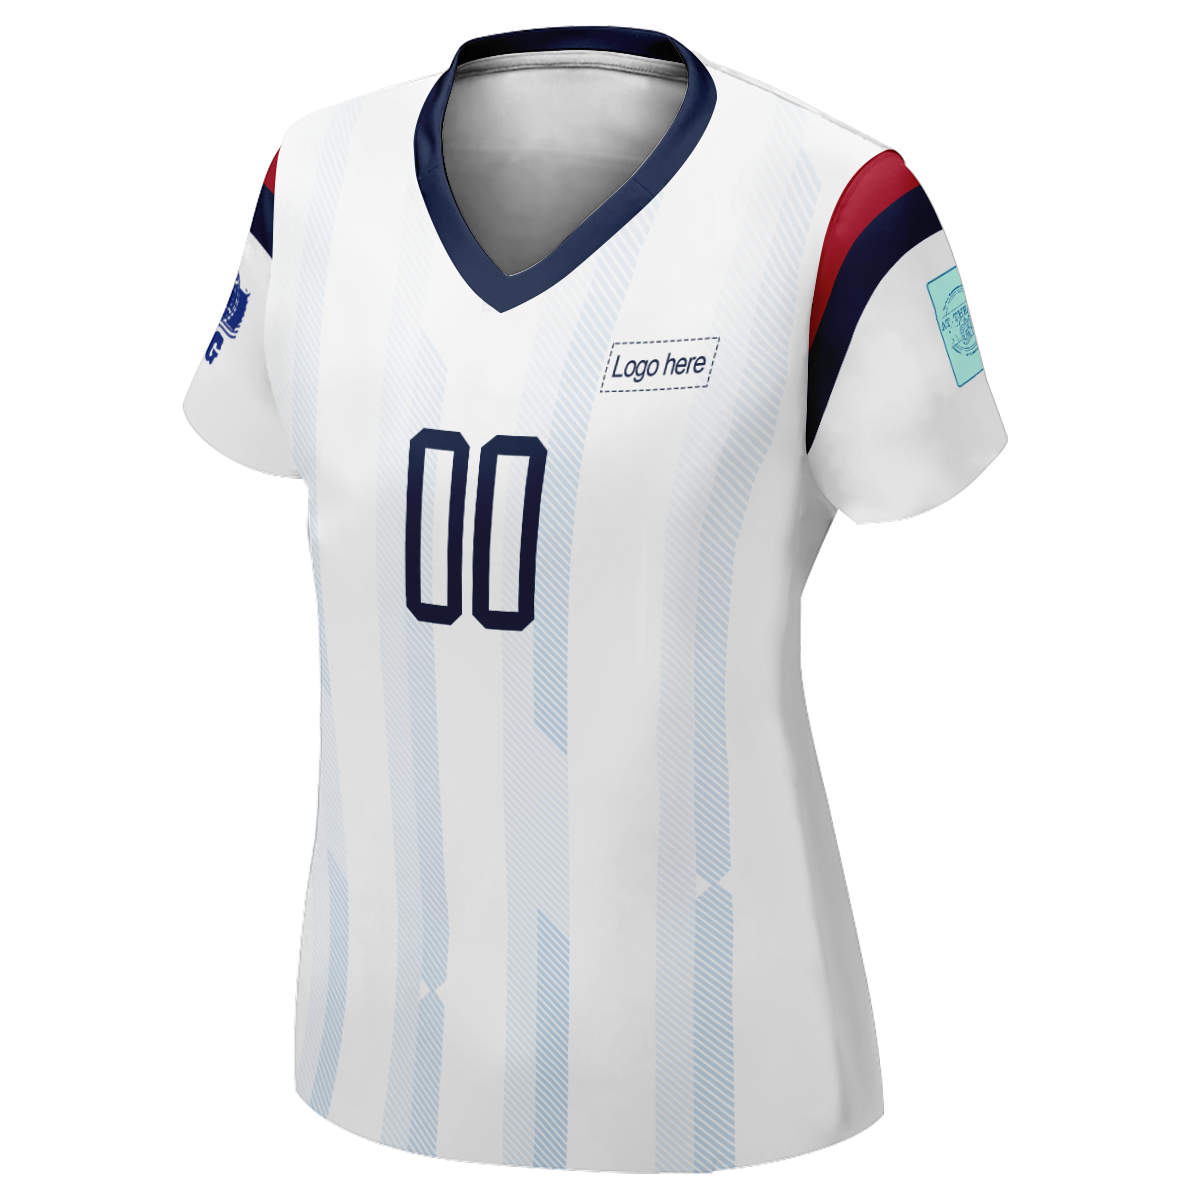 Women's Custom South Korea World Cup Soccer Jerseys With Logo